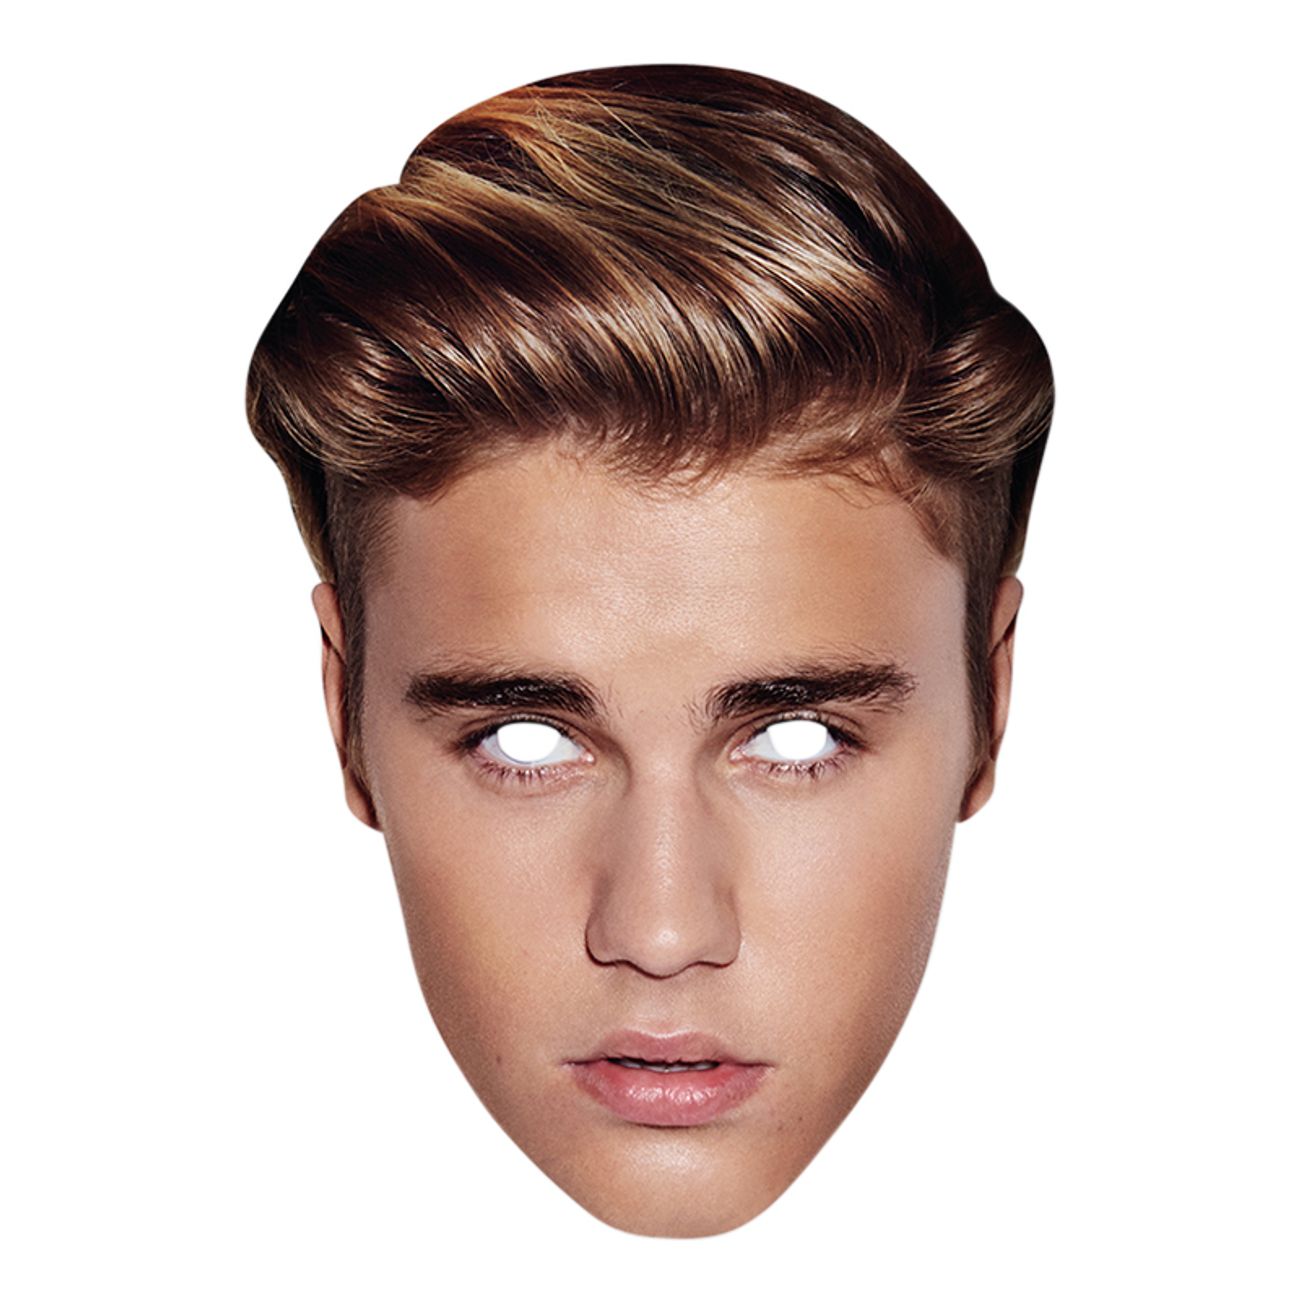 kronblad planer motivet Ung Justin Bieber Papmaske | Partykungen